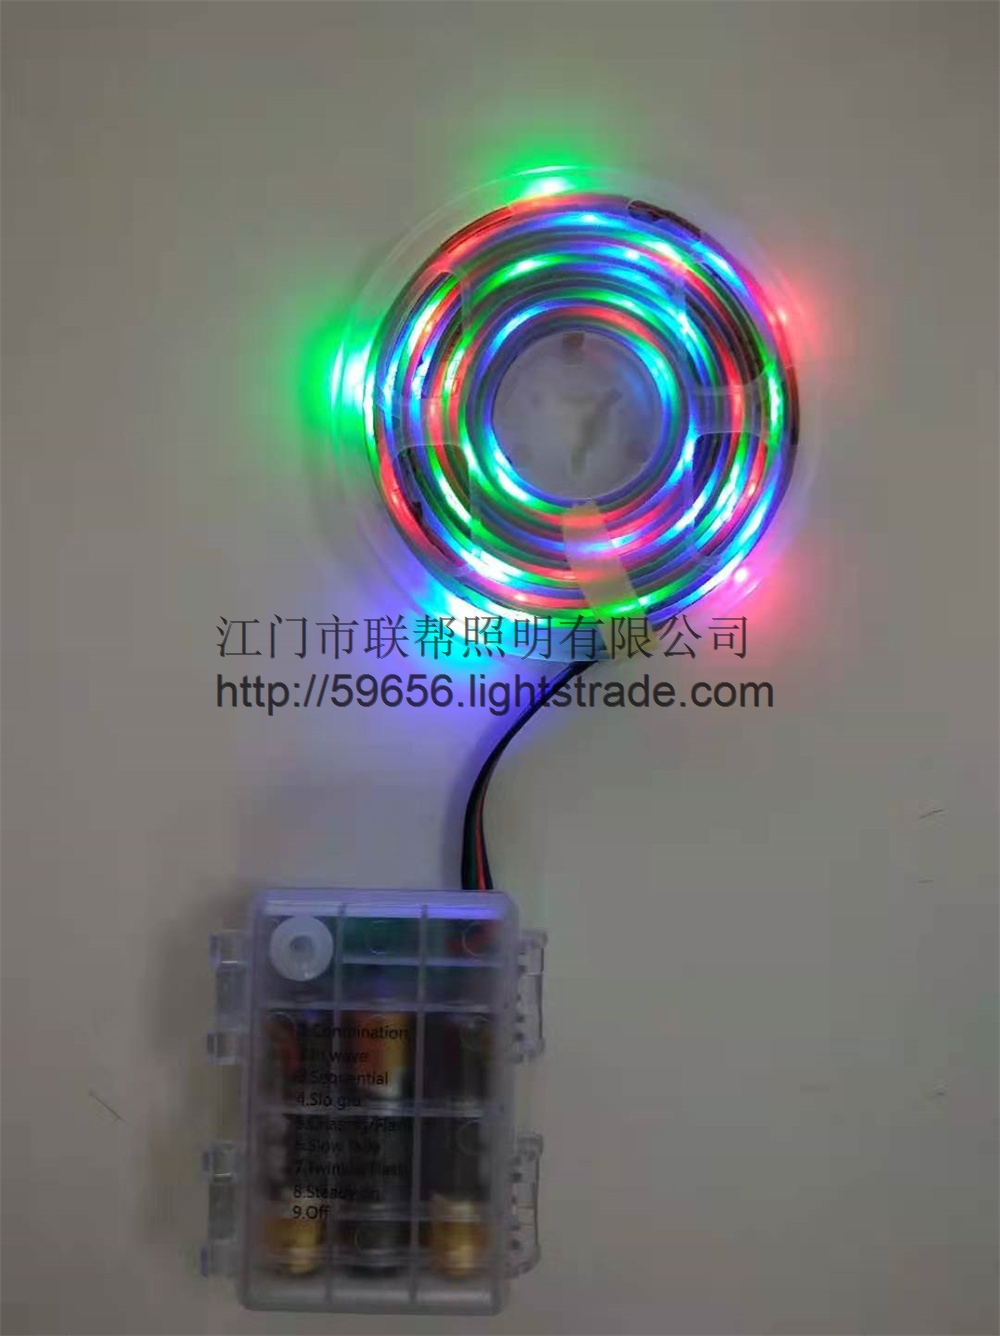 3AA Battery Waterproof LED Strip Lights Flexible RGB 5V Lighting Remote Controller Ribbon Lamp